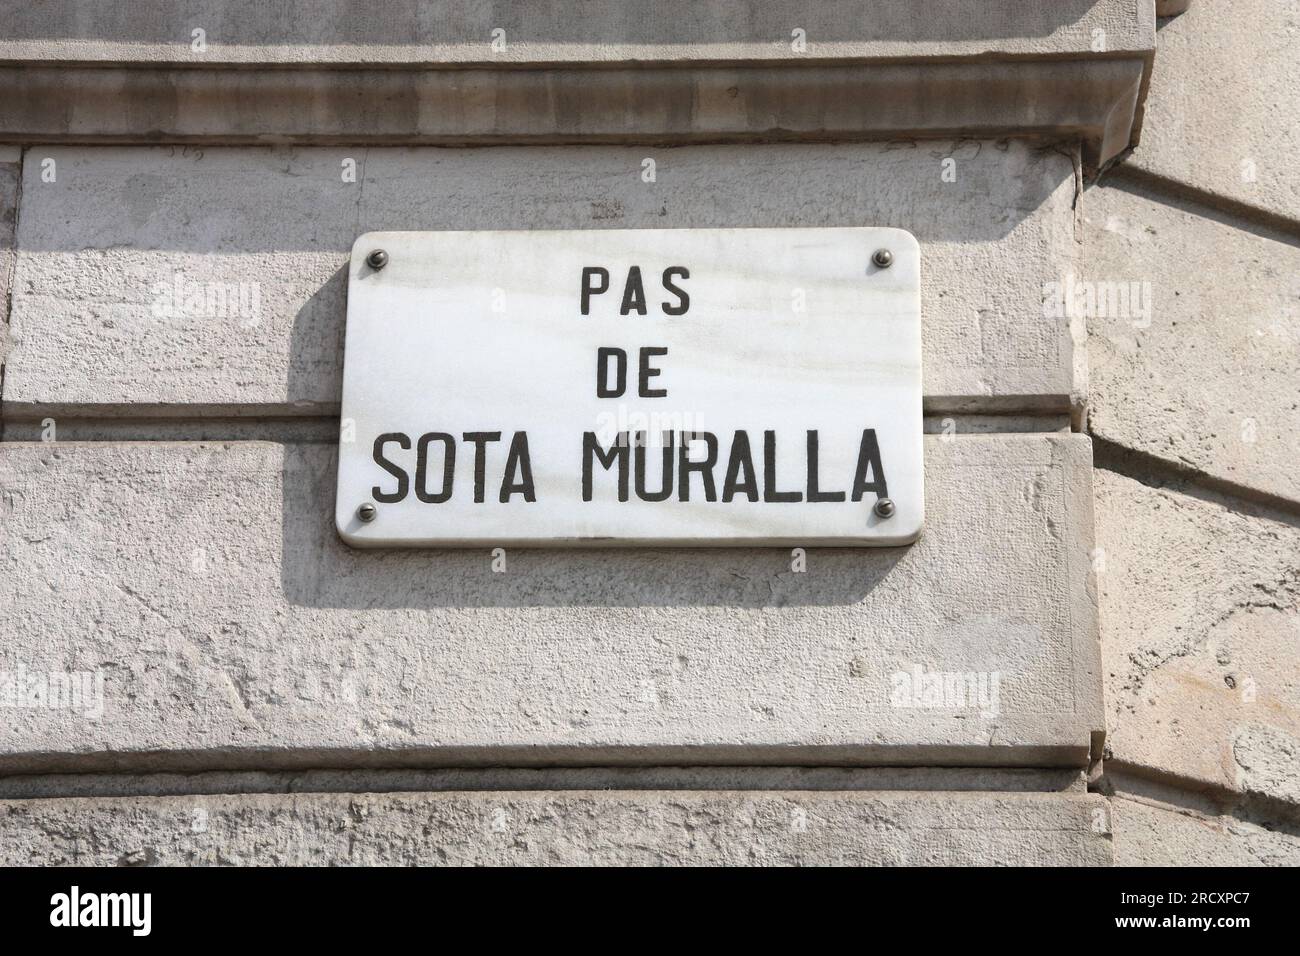 Street sign in Barcelona city, Spain. Pas De Sota Muralla. Stock Photo